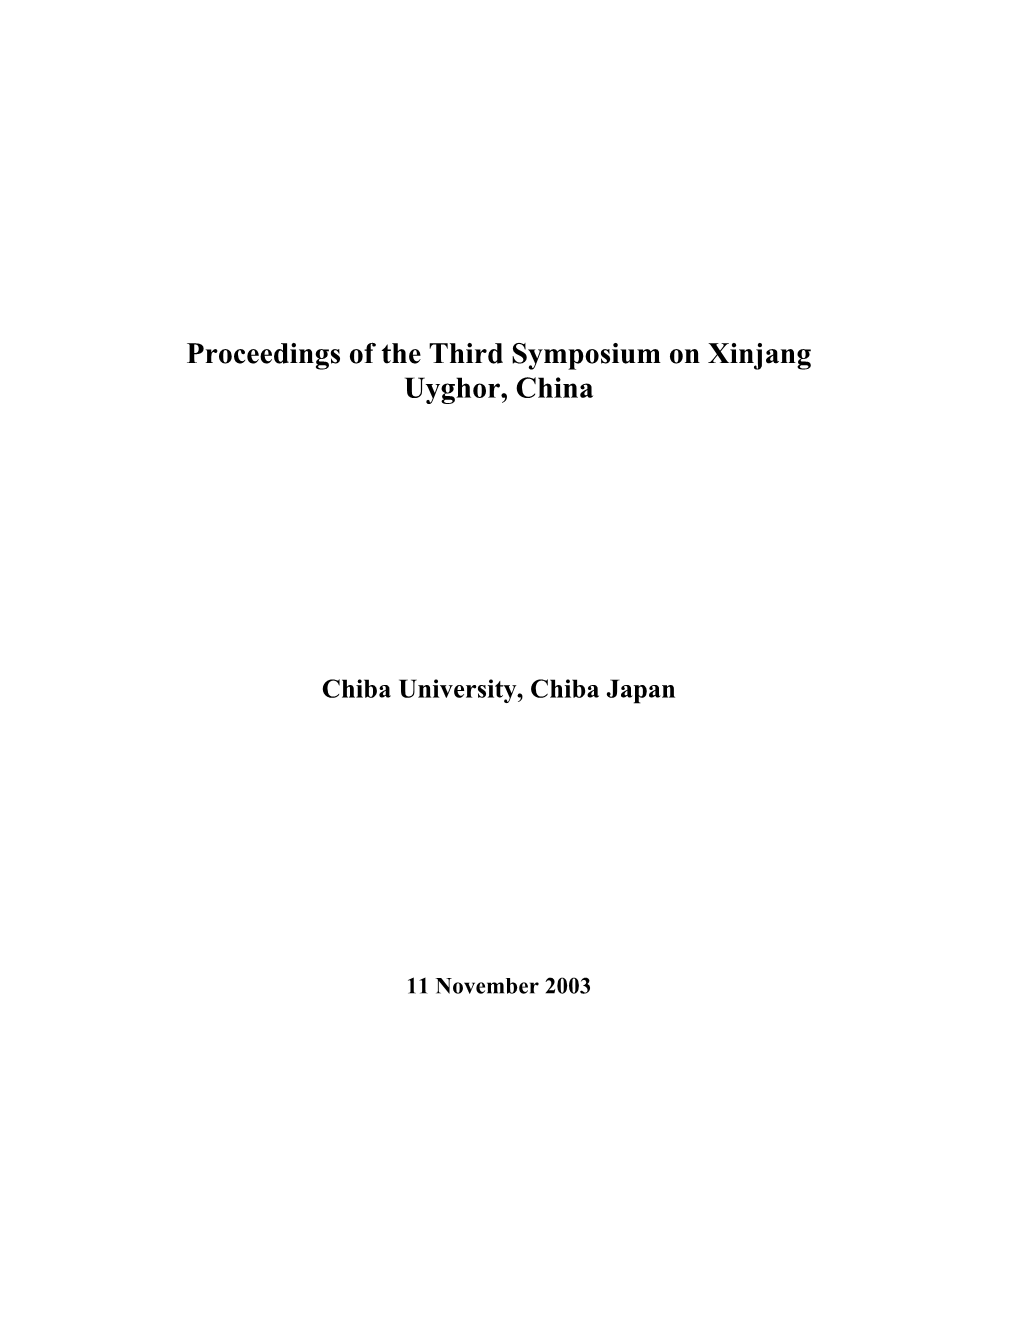 Proceedings of the Third Symposium on Xinjang Uyghor, China